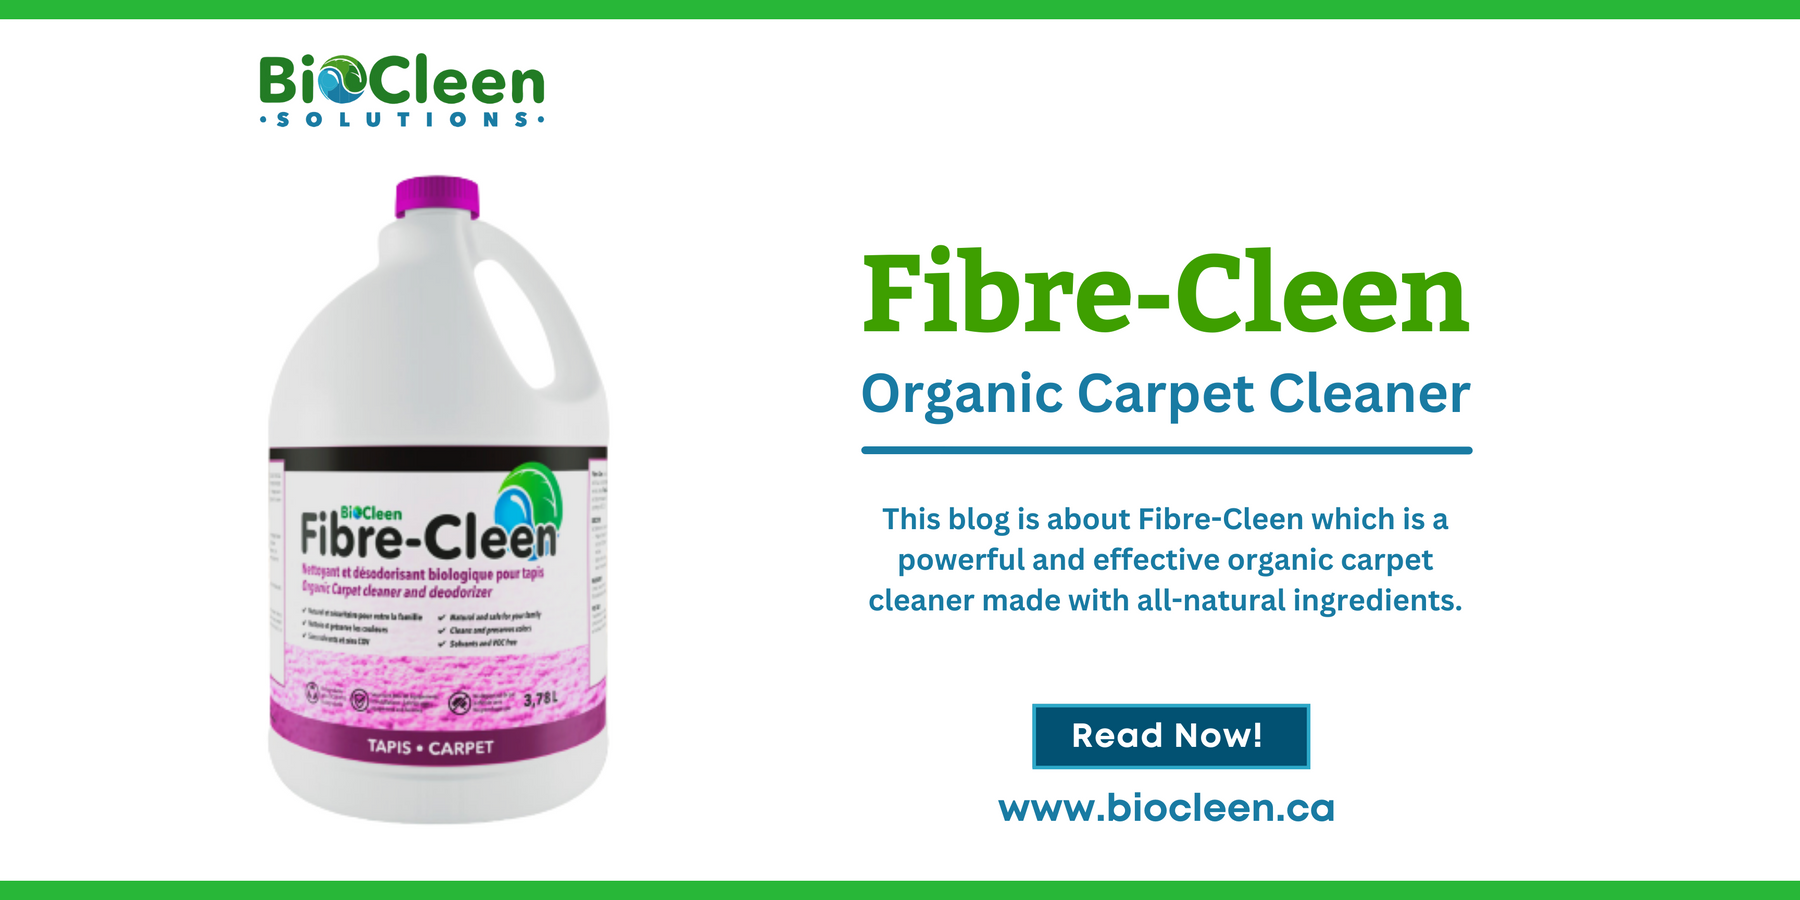 Fibre-Cleen : Organic Carpet Cleaner